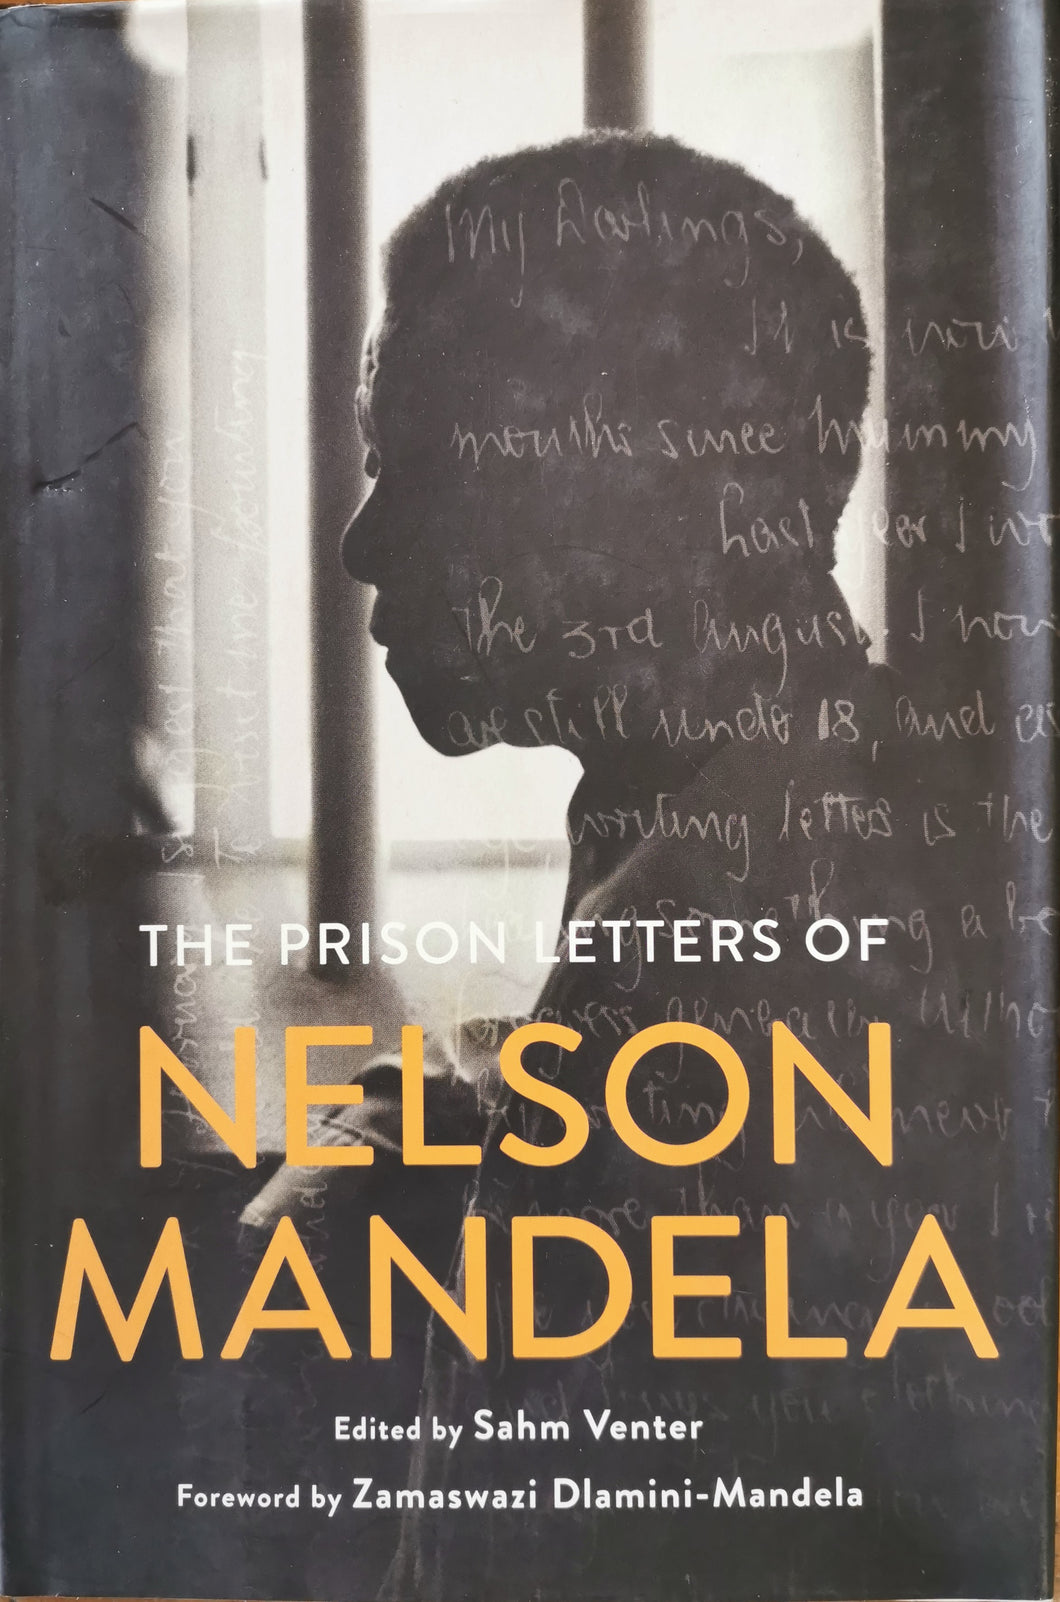 The Prison Letters of Nelson Mandela - edited by Sahm Venter